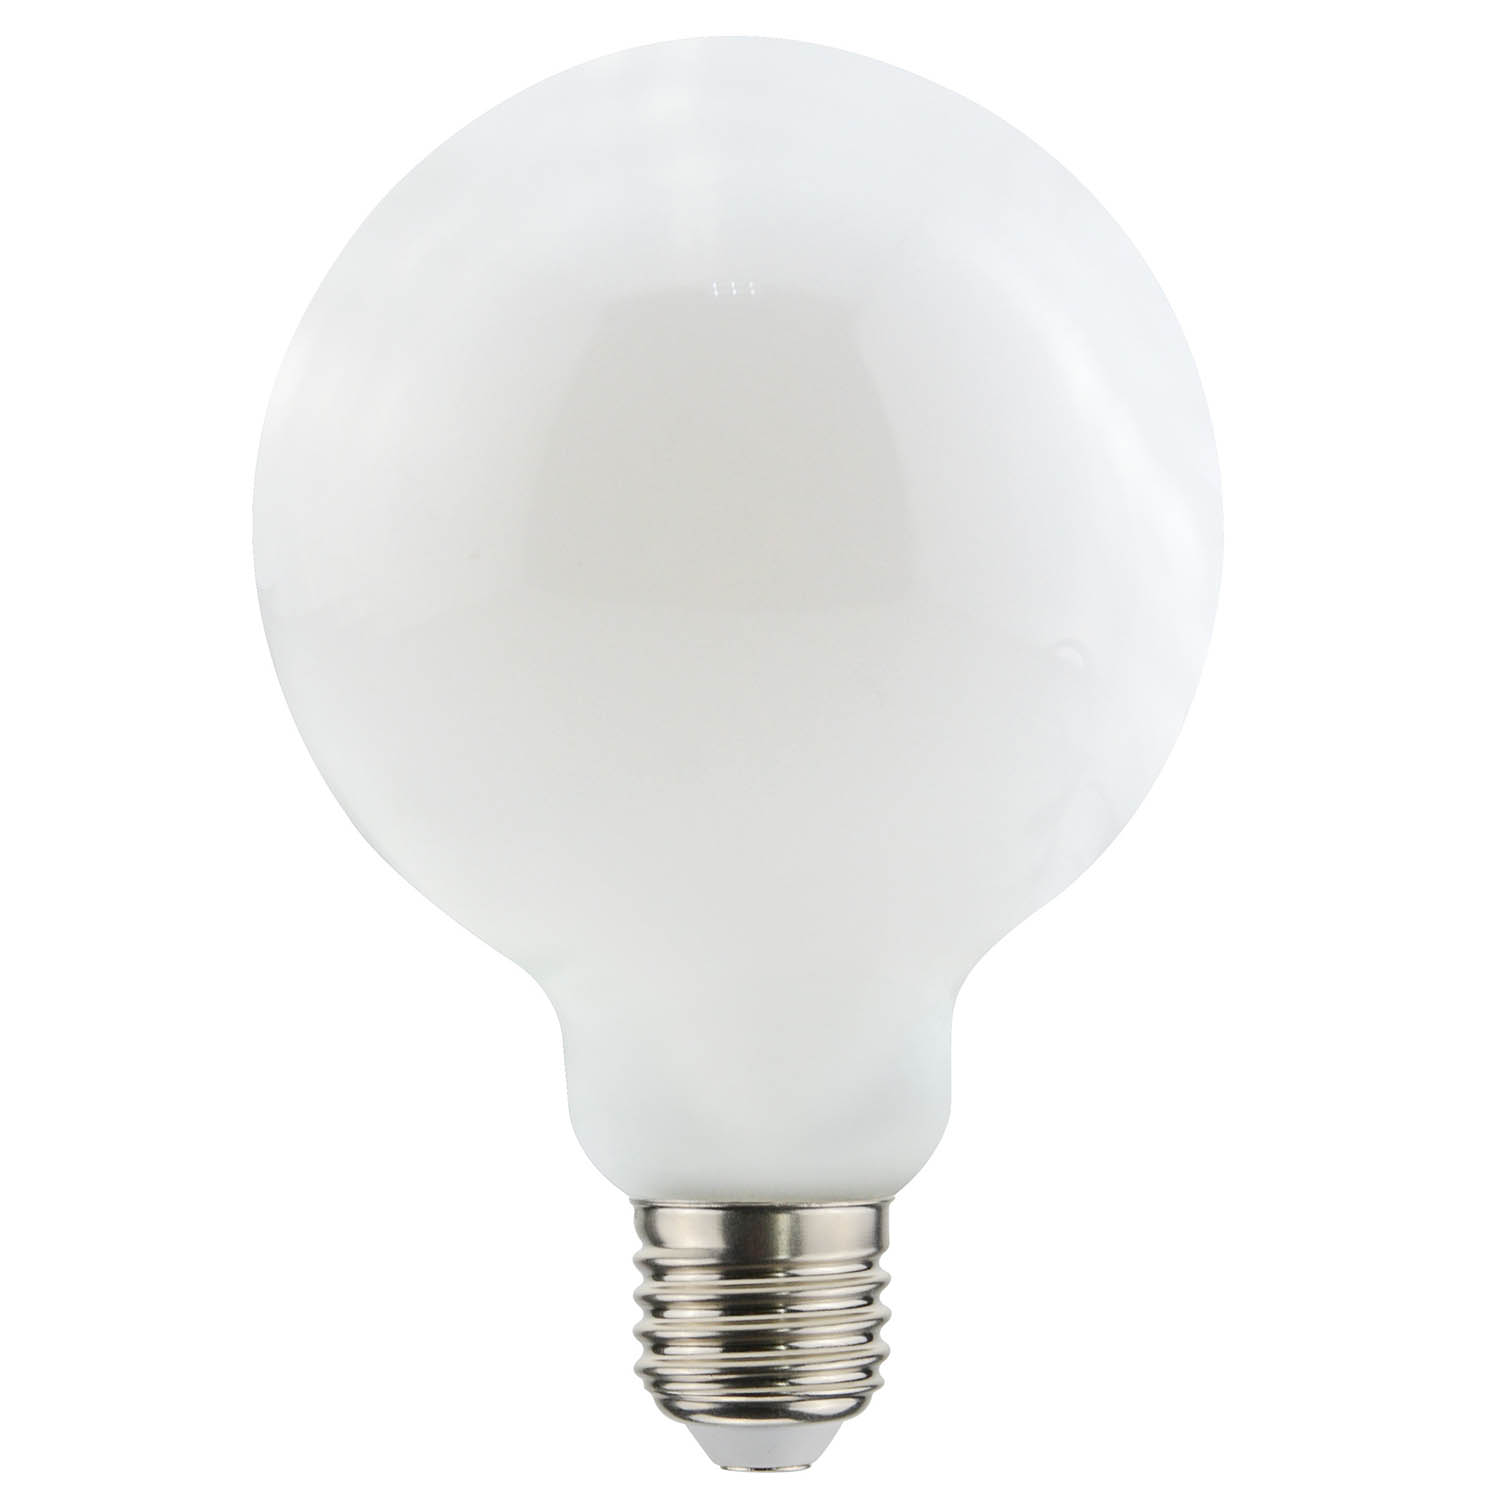 Ampoule LED type globe E27 8W 900lm lumière chaude 95mm dimmable